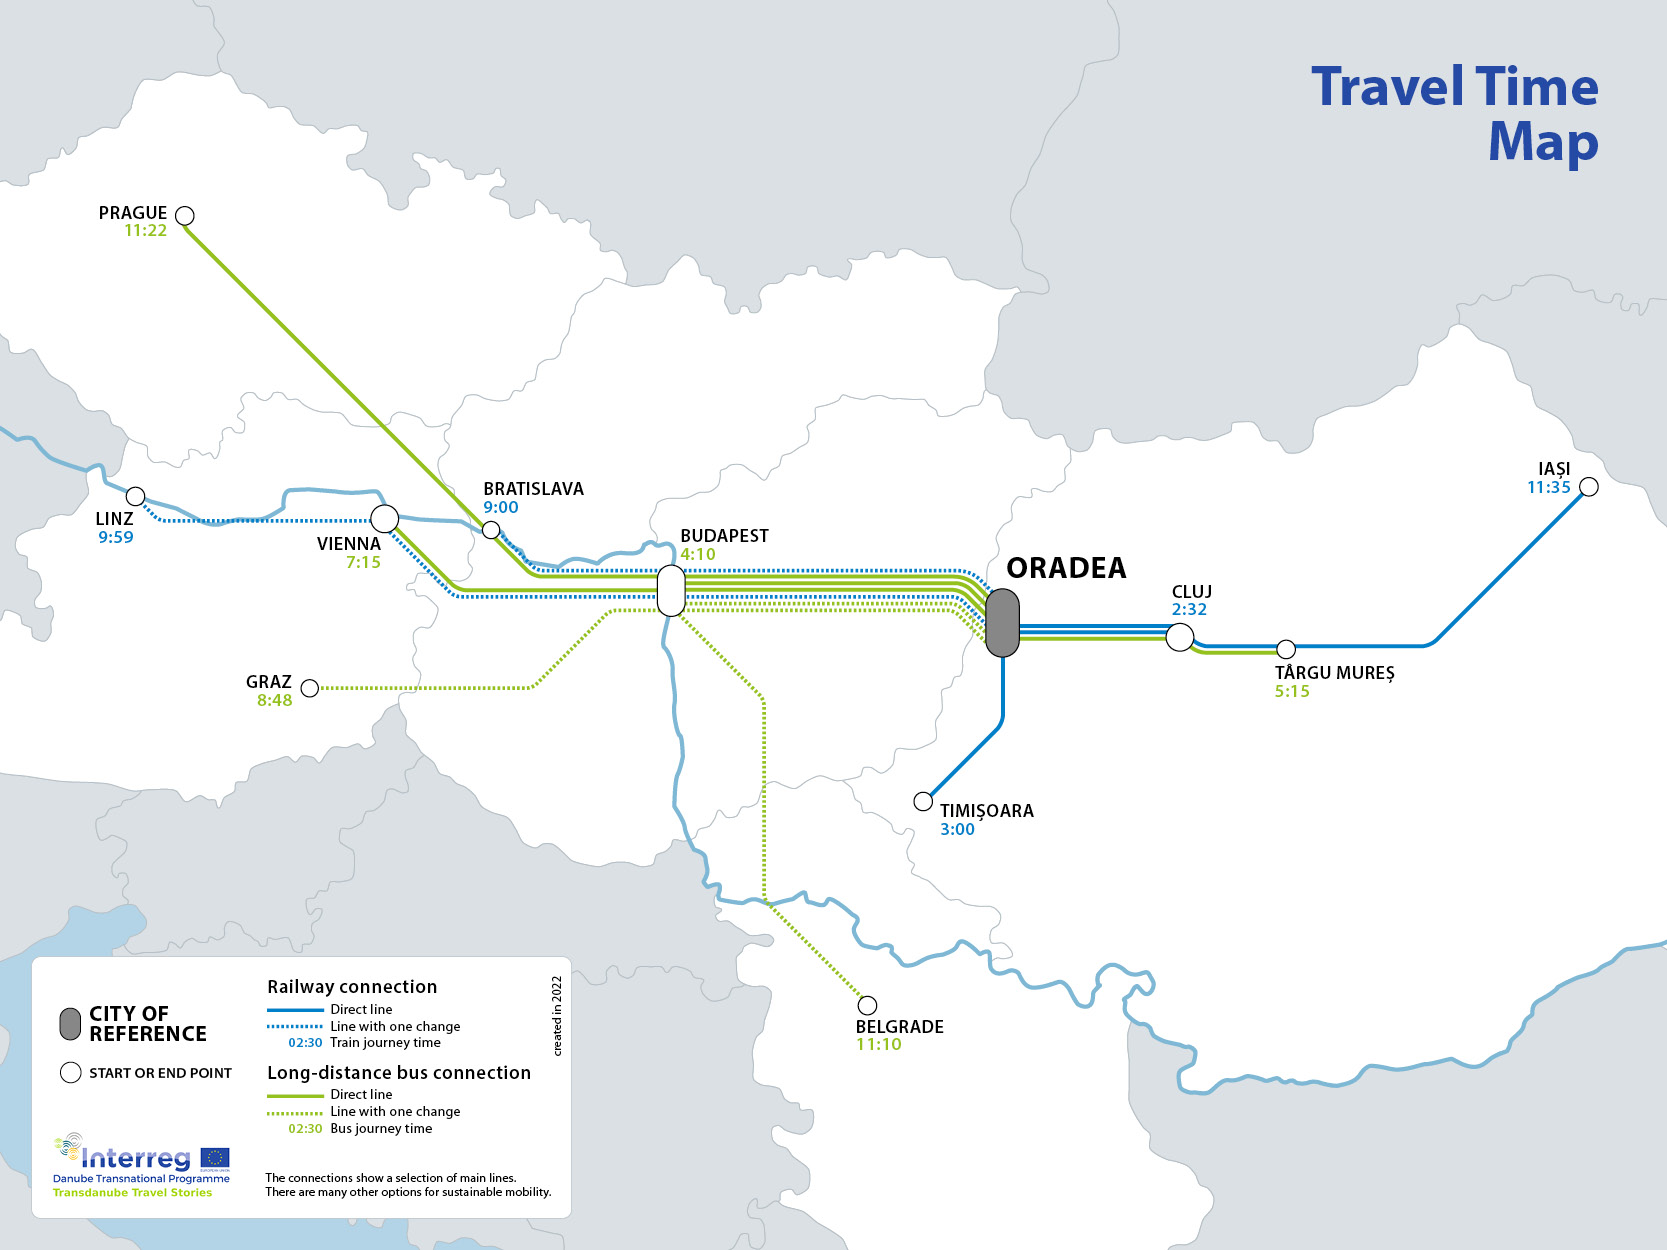 Travel Time Map - Oradea (enlarge image)